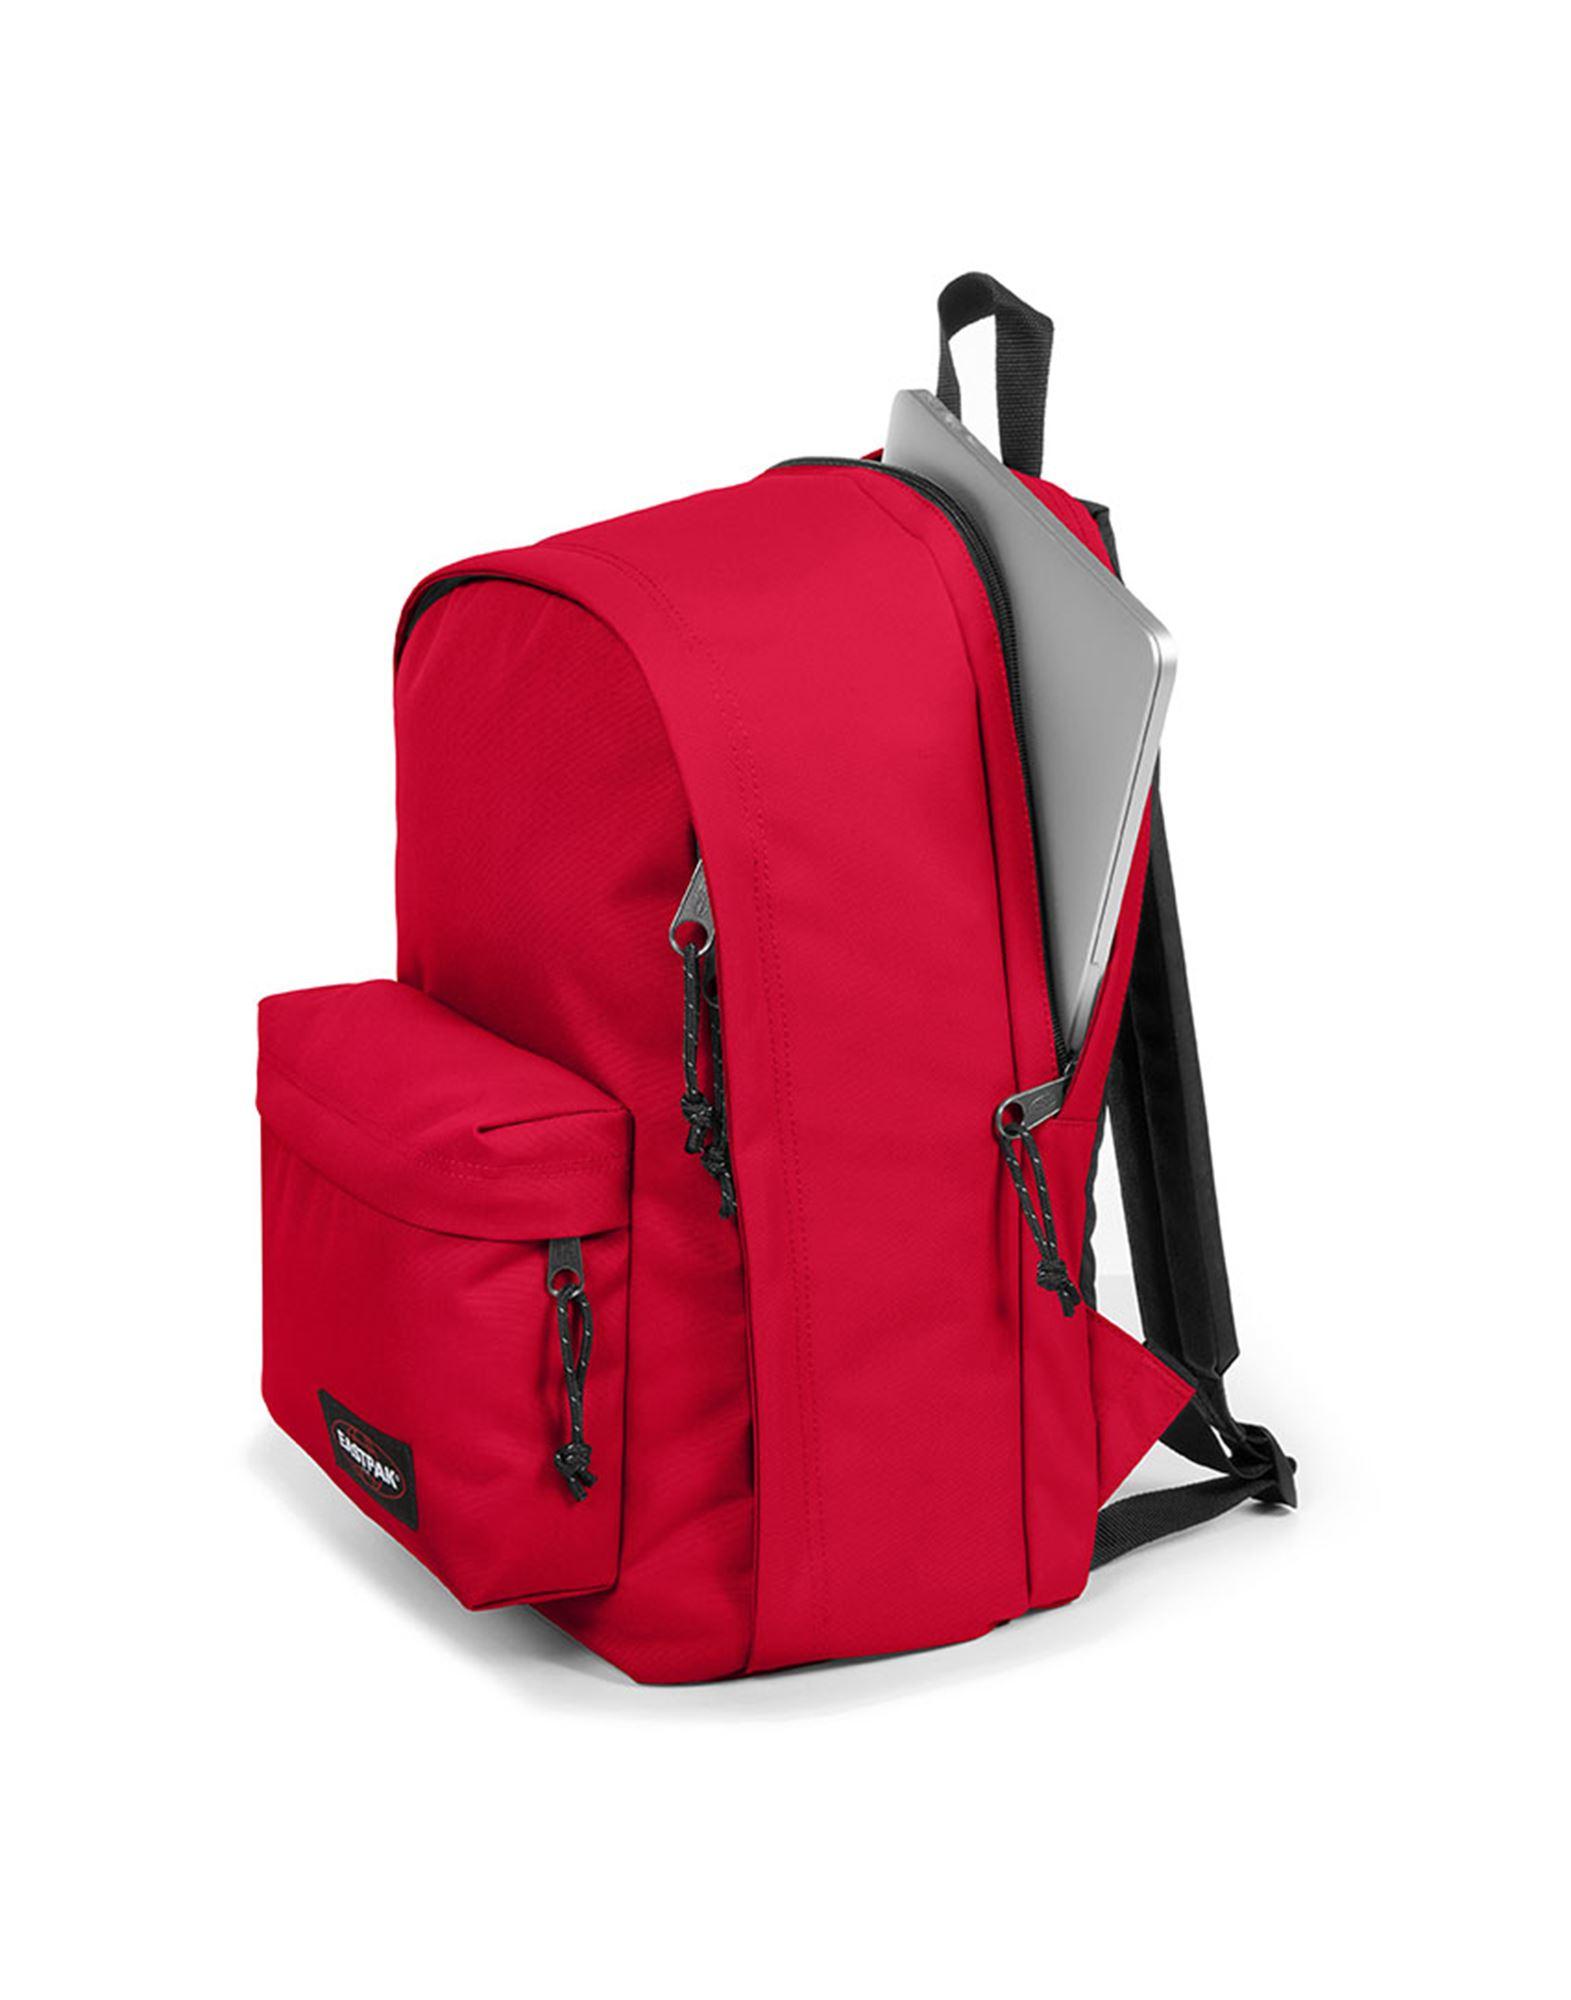 Eastpak Backpack in Red | Lyst